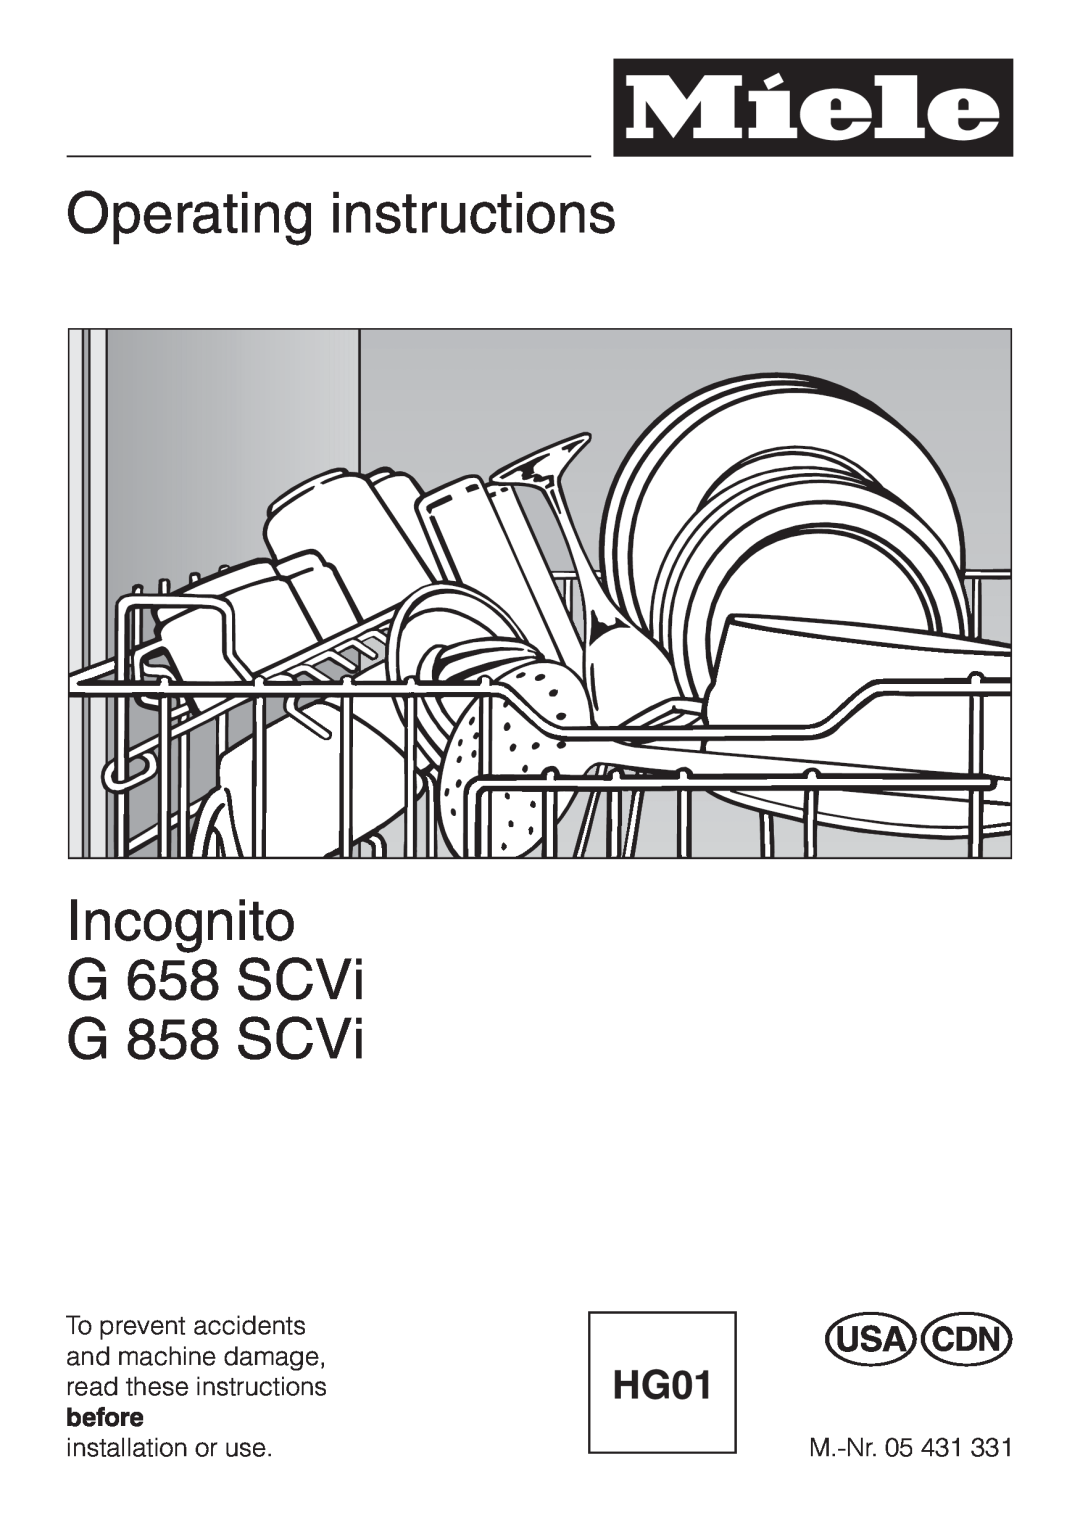 Miele G 658 SCVI, G 858 SCVI operating instructions Operating instructions, Incognito, G 658 SCVi, G 858 SCVi 